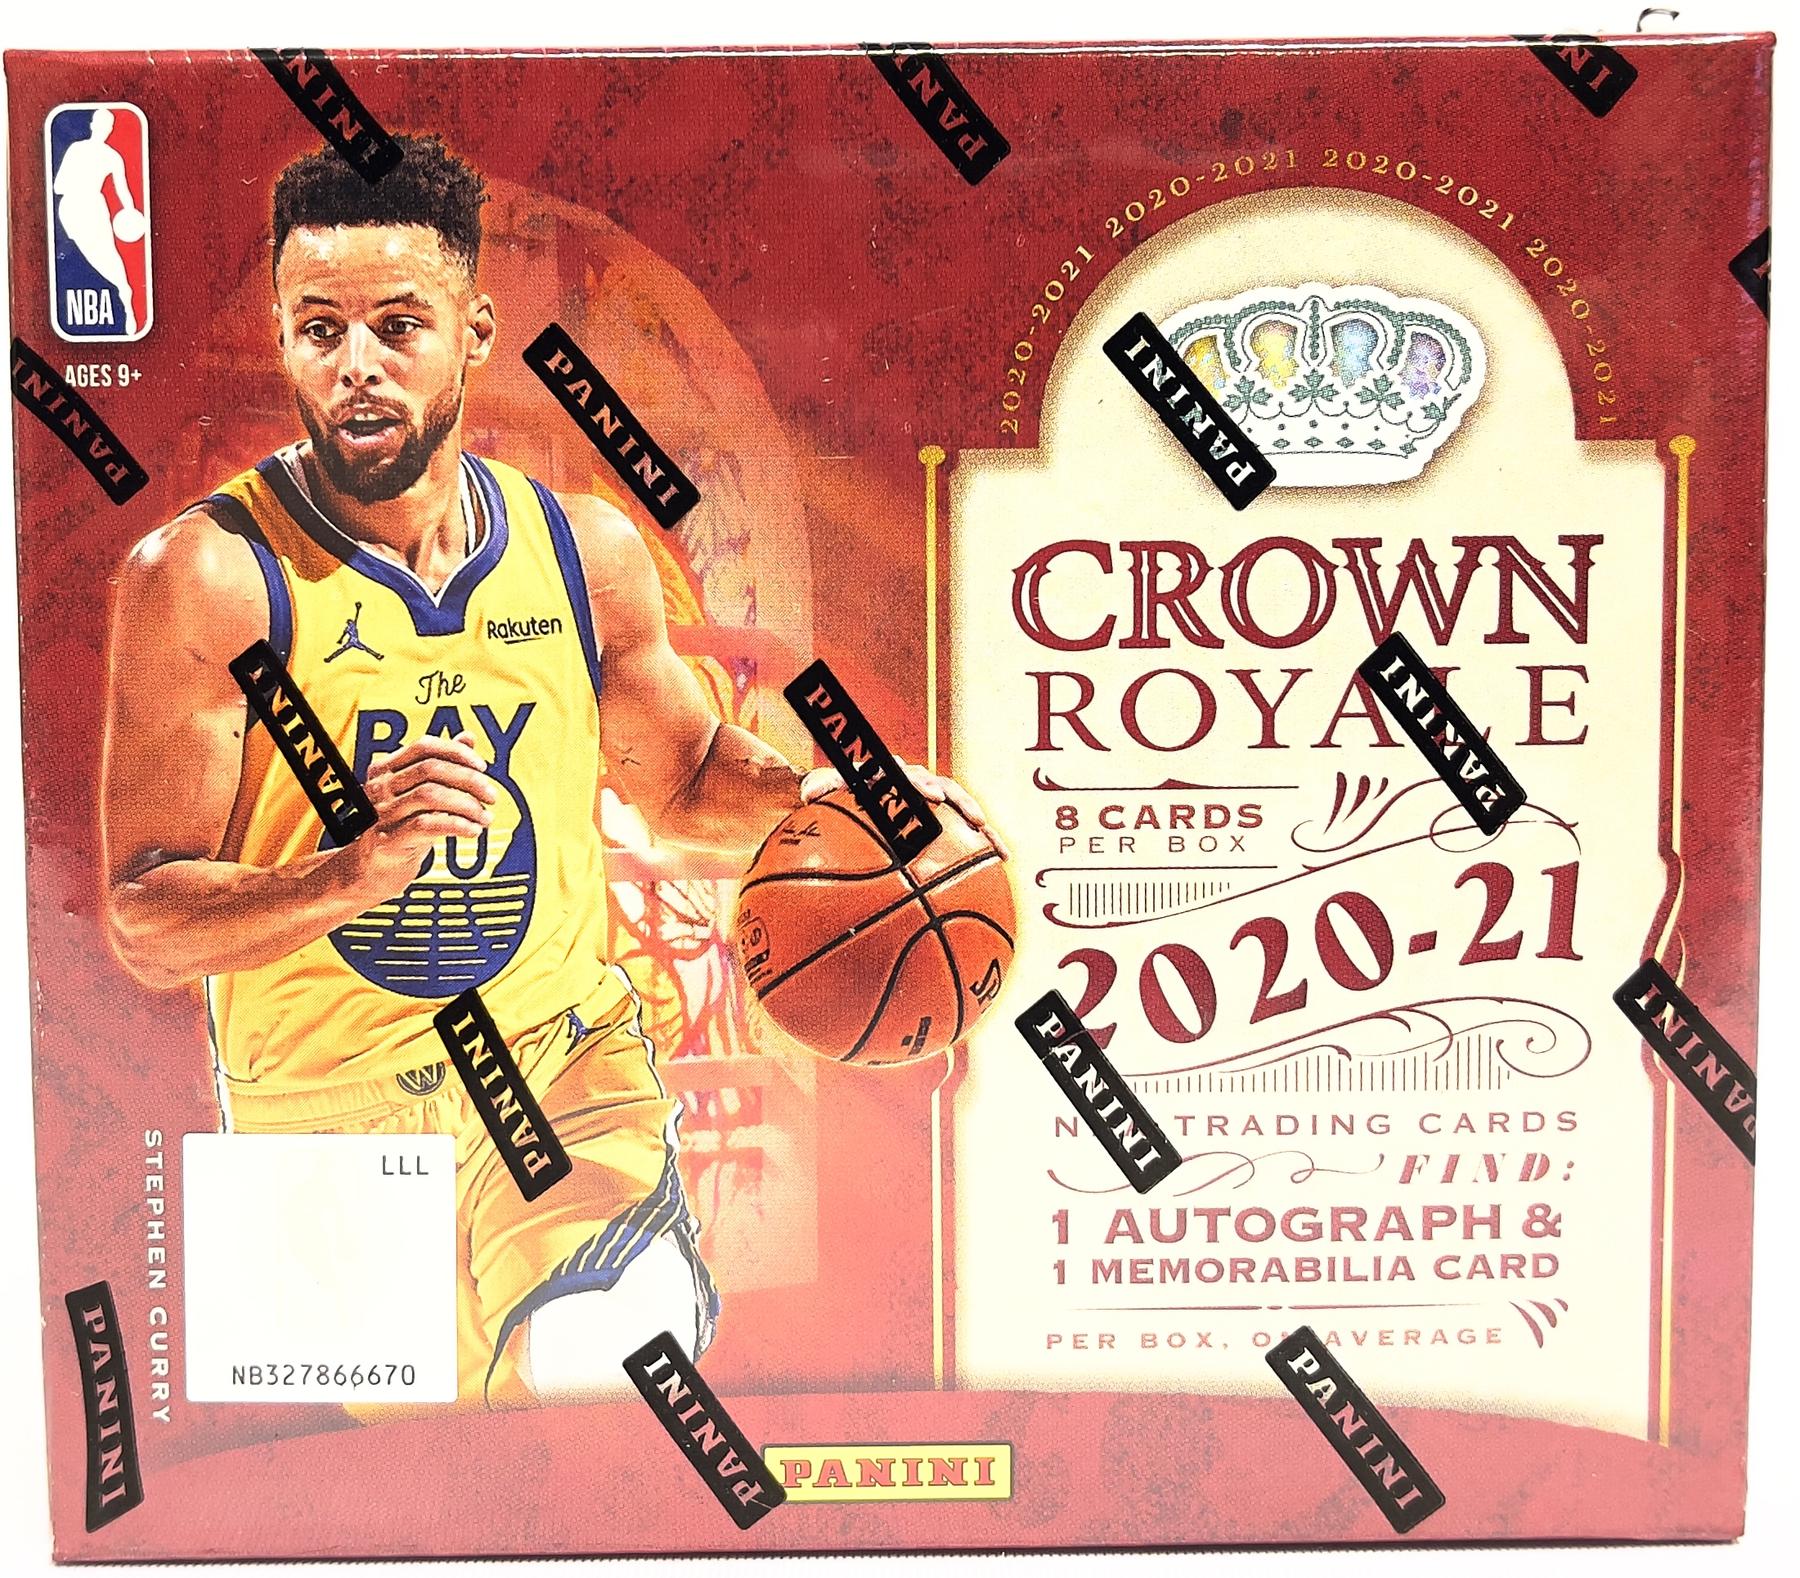 2019/20 Panini Crown Royale Basketball Factory Sealed Hobby Box 